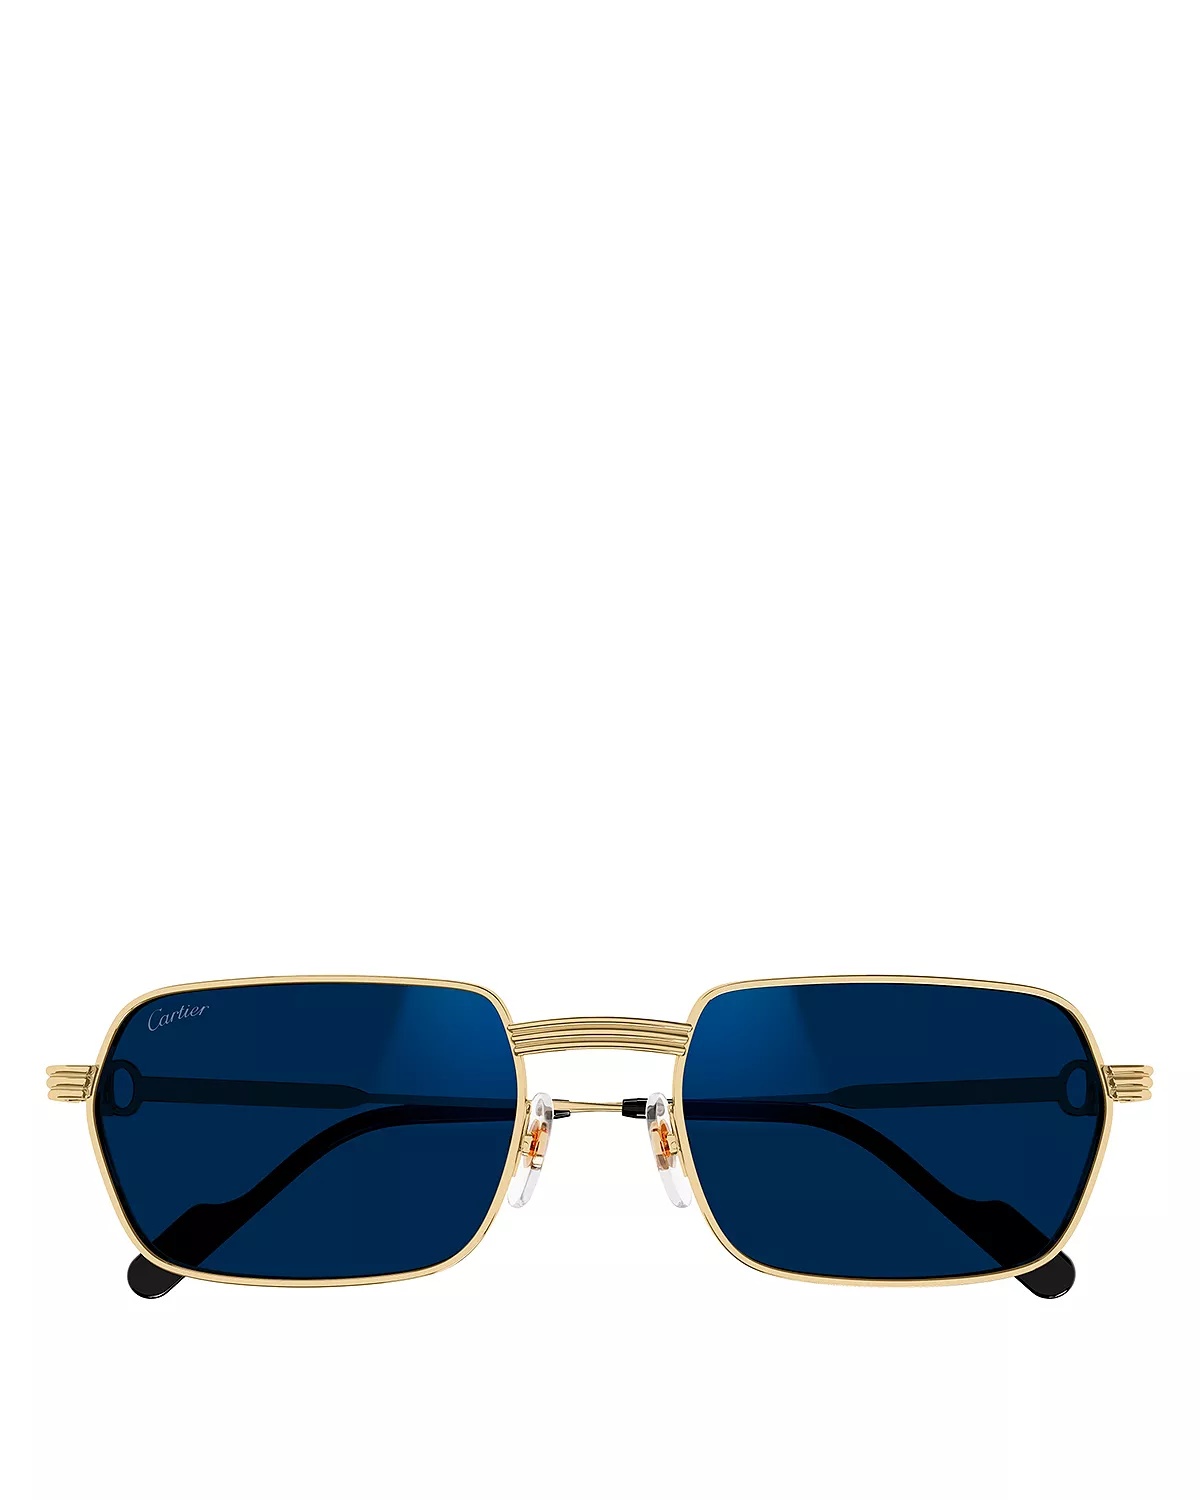 Premiere De Cartier 24 Carat Gold Plated Photochromatic Rectangular Sunglasses, 56mm - 6